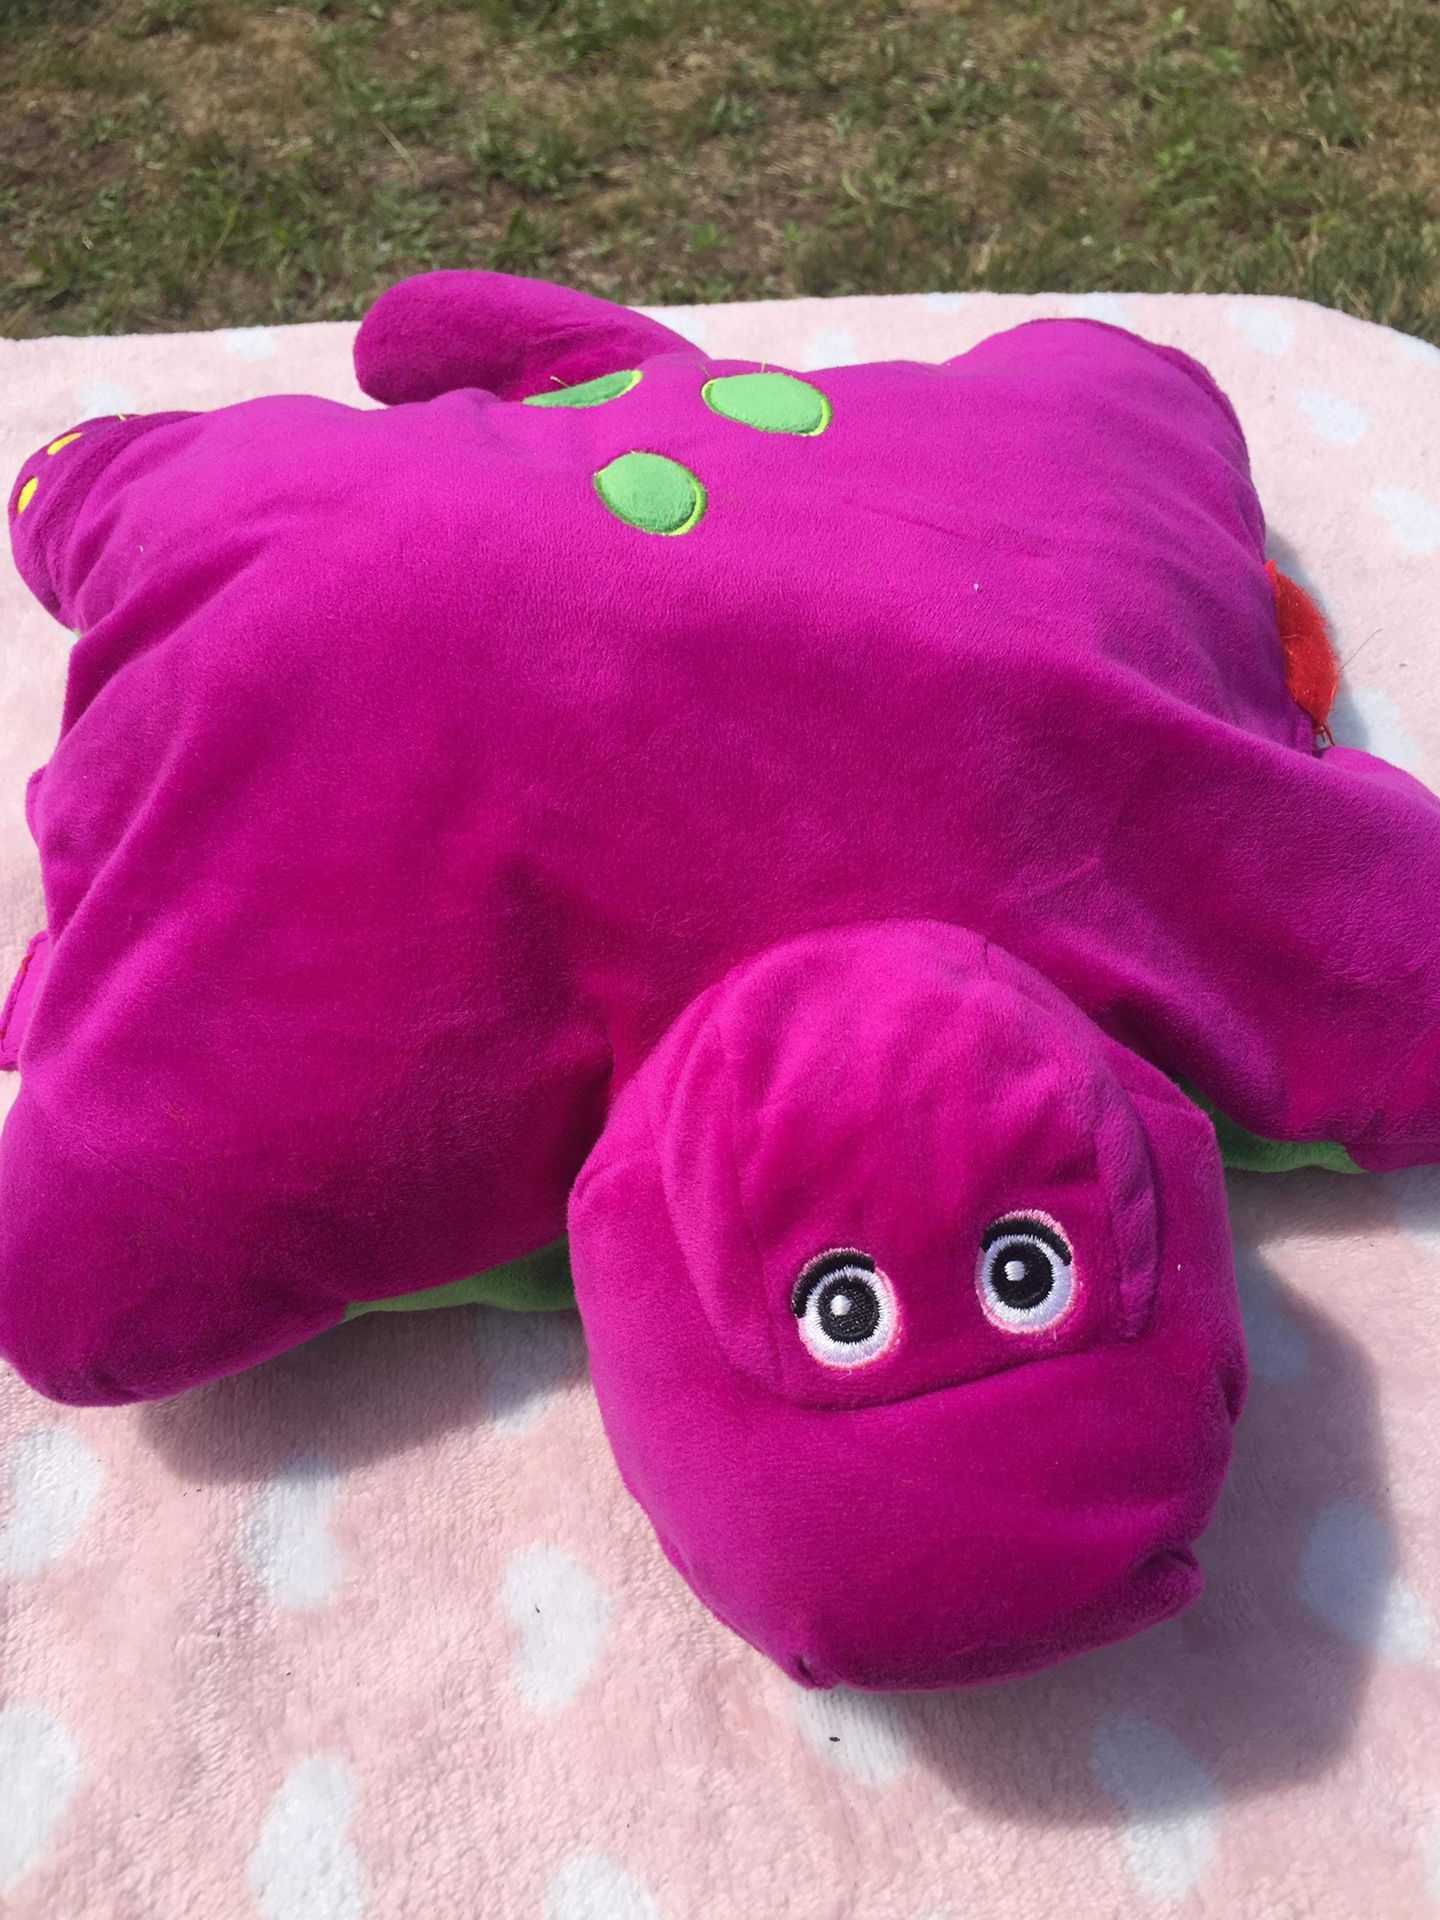 Barney the purple dinosaur small pillow pet plush stuffed animal